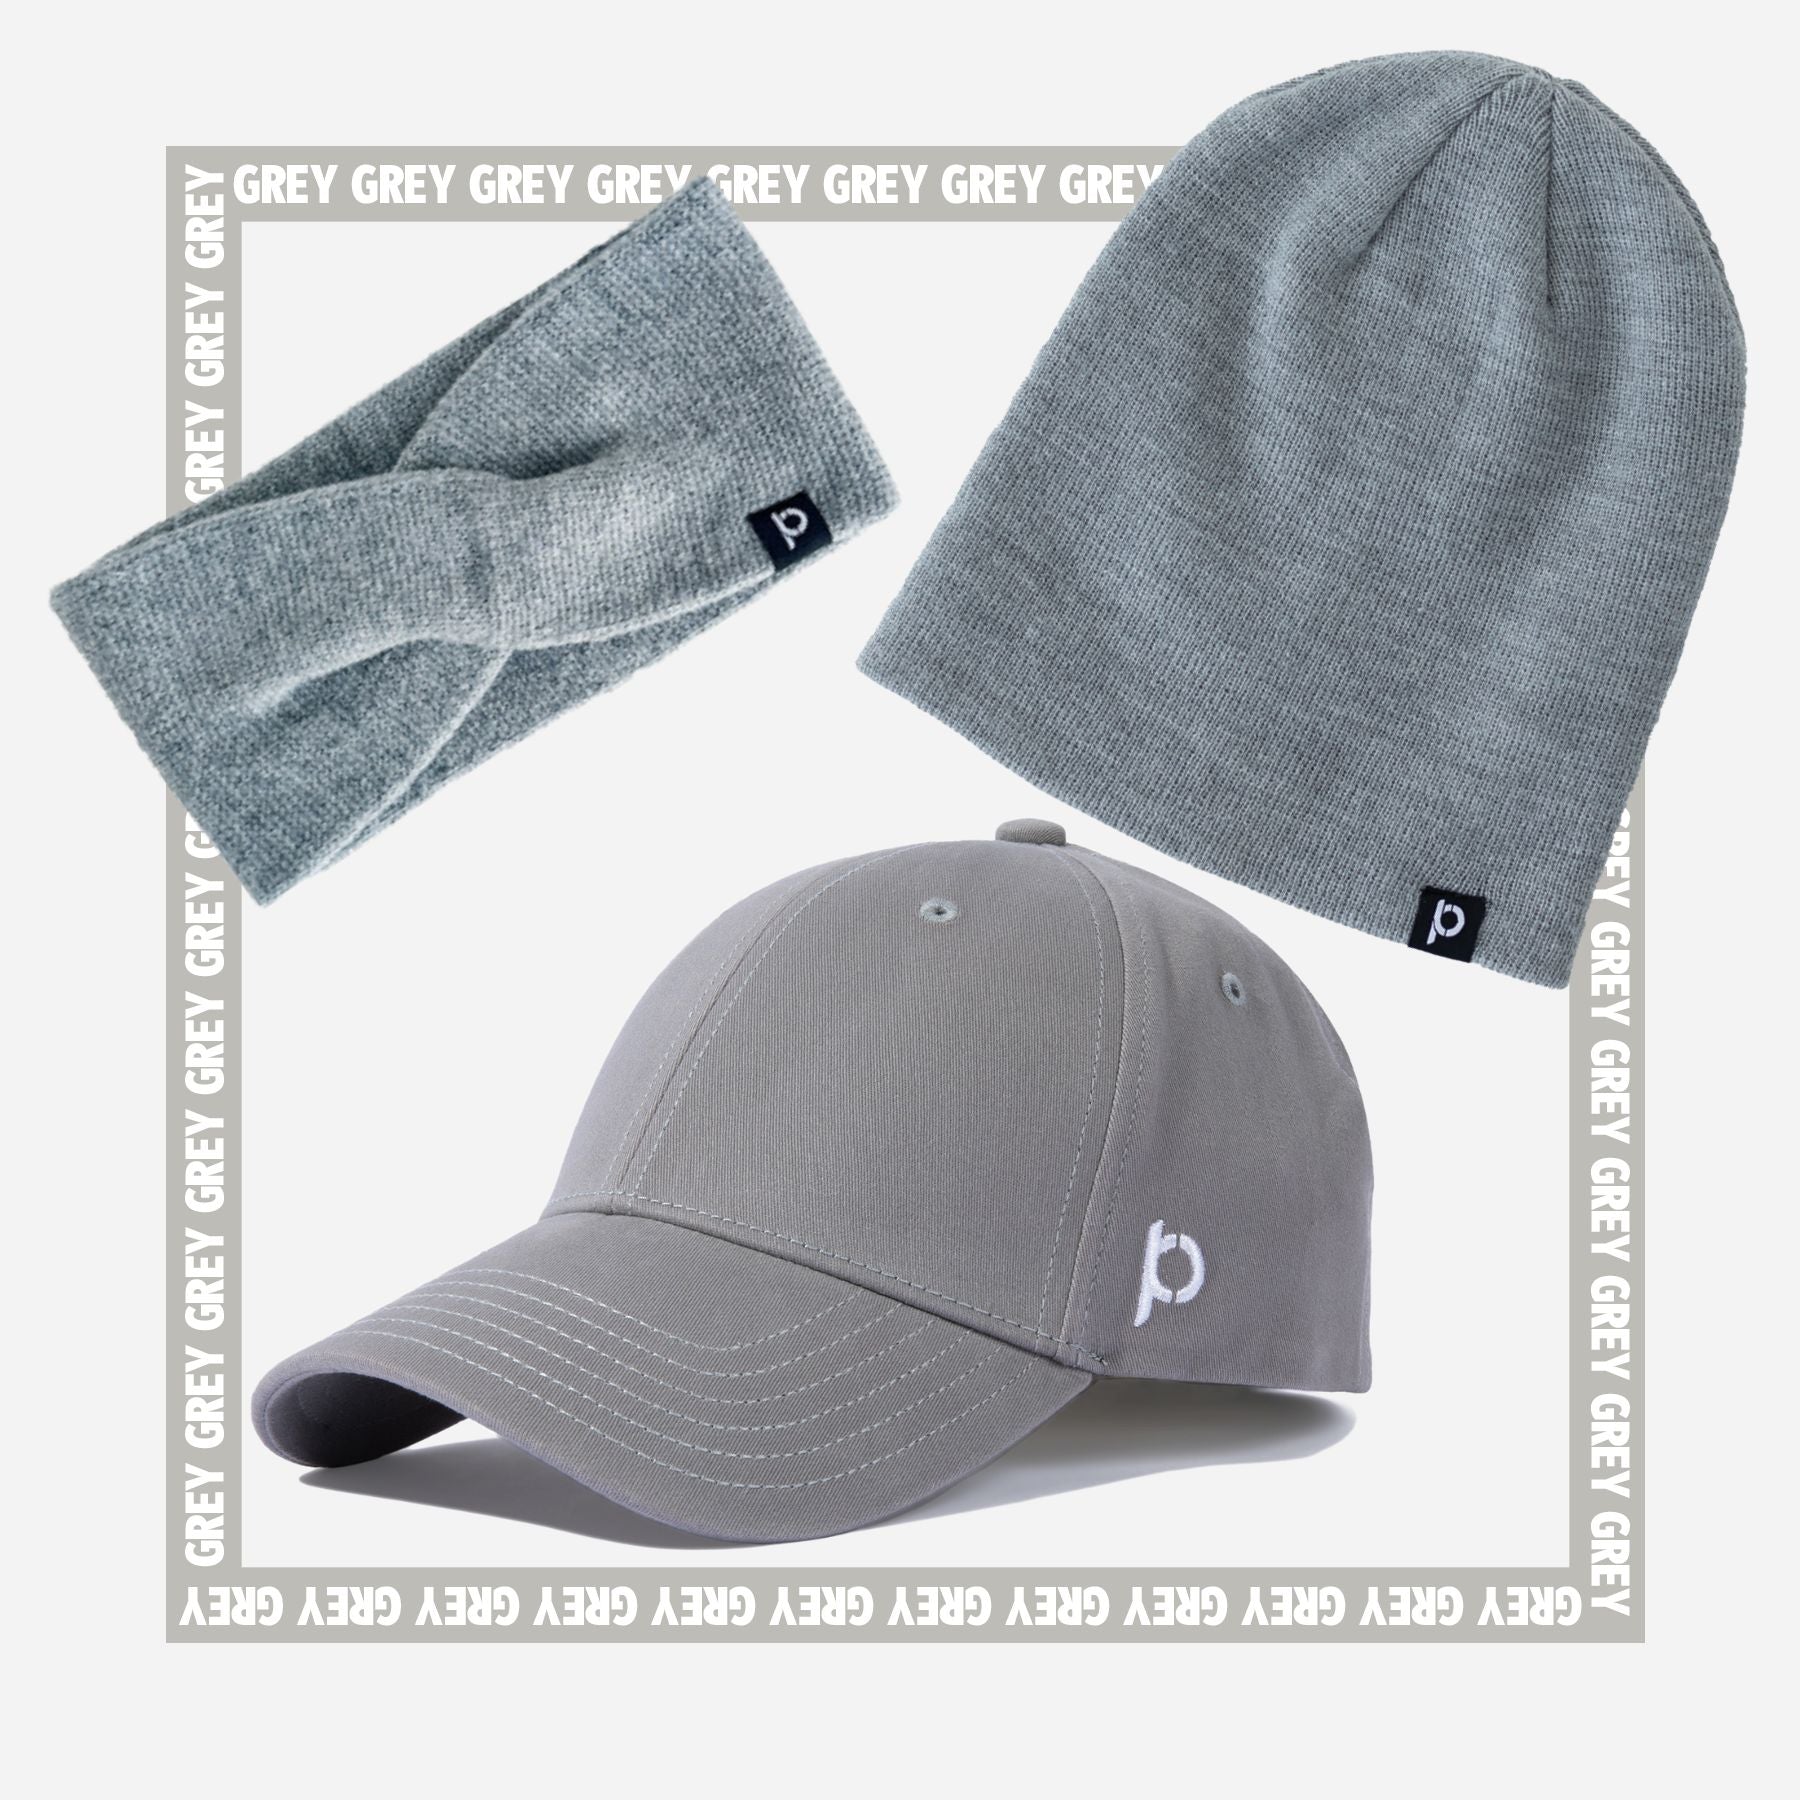 Ponyback grey bundle with a grey beanie, baseball hat and headband